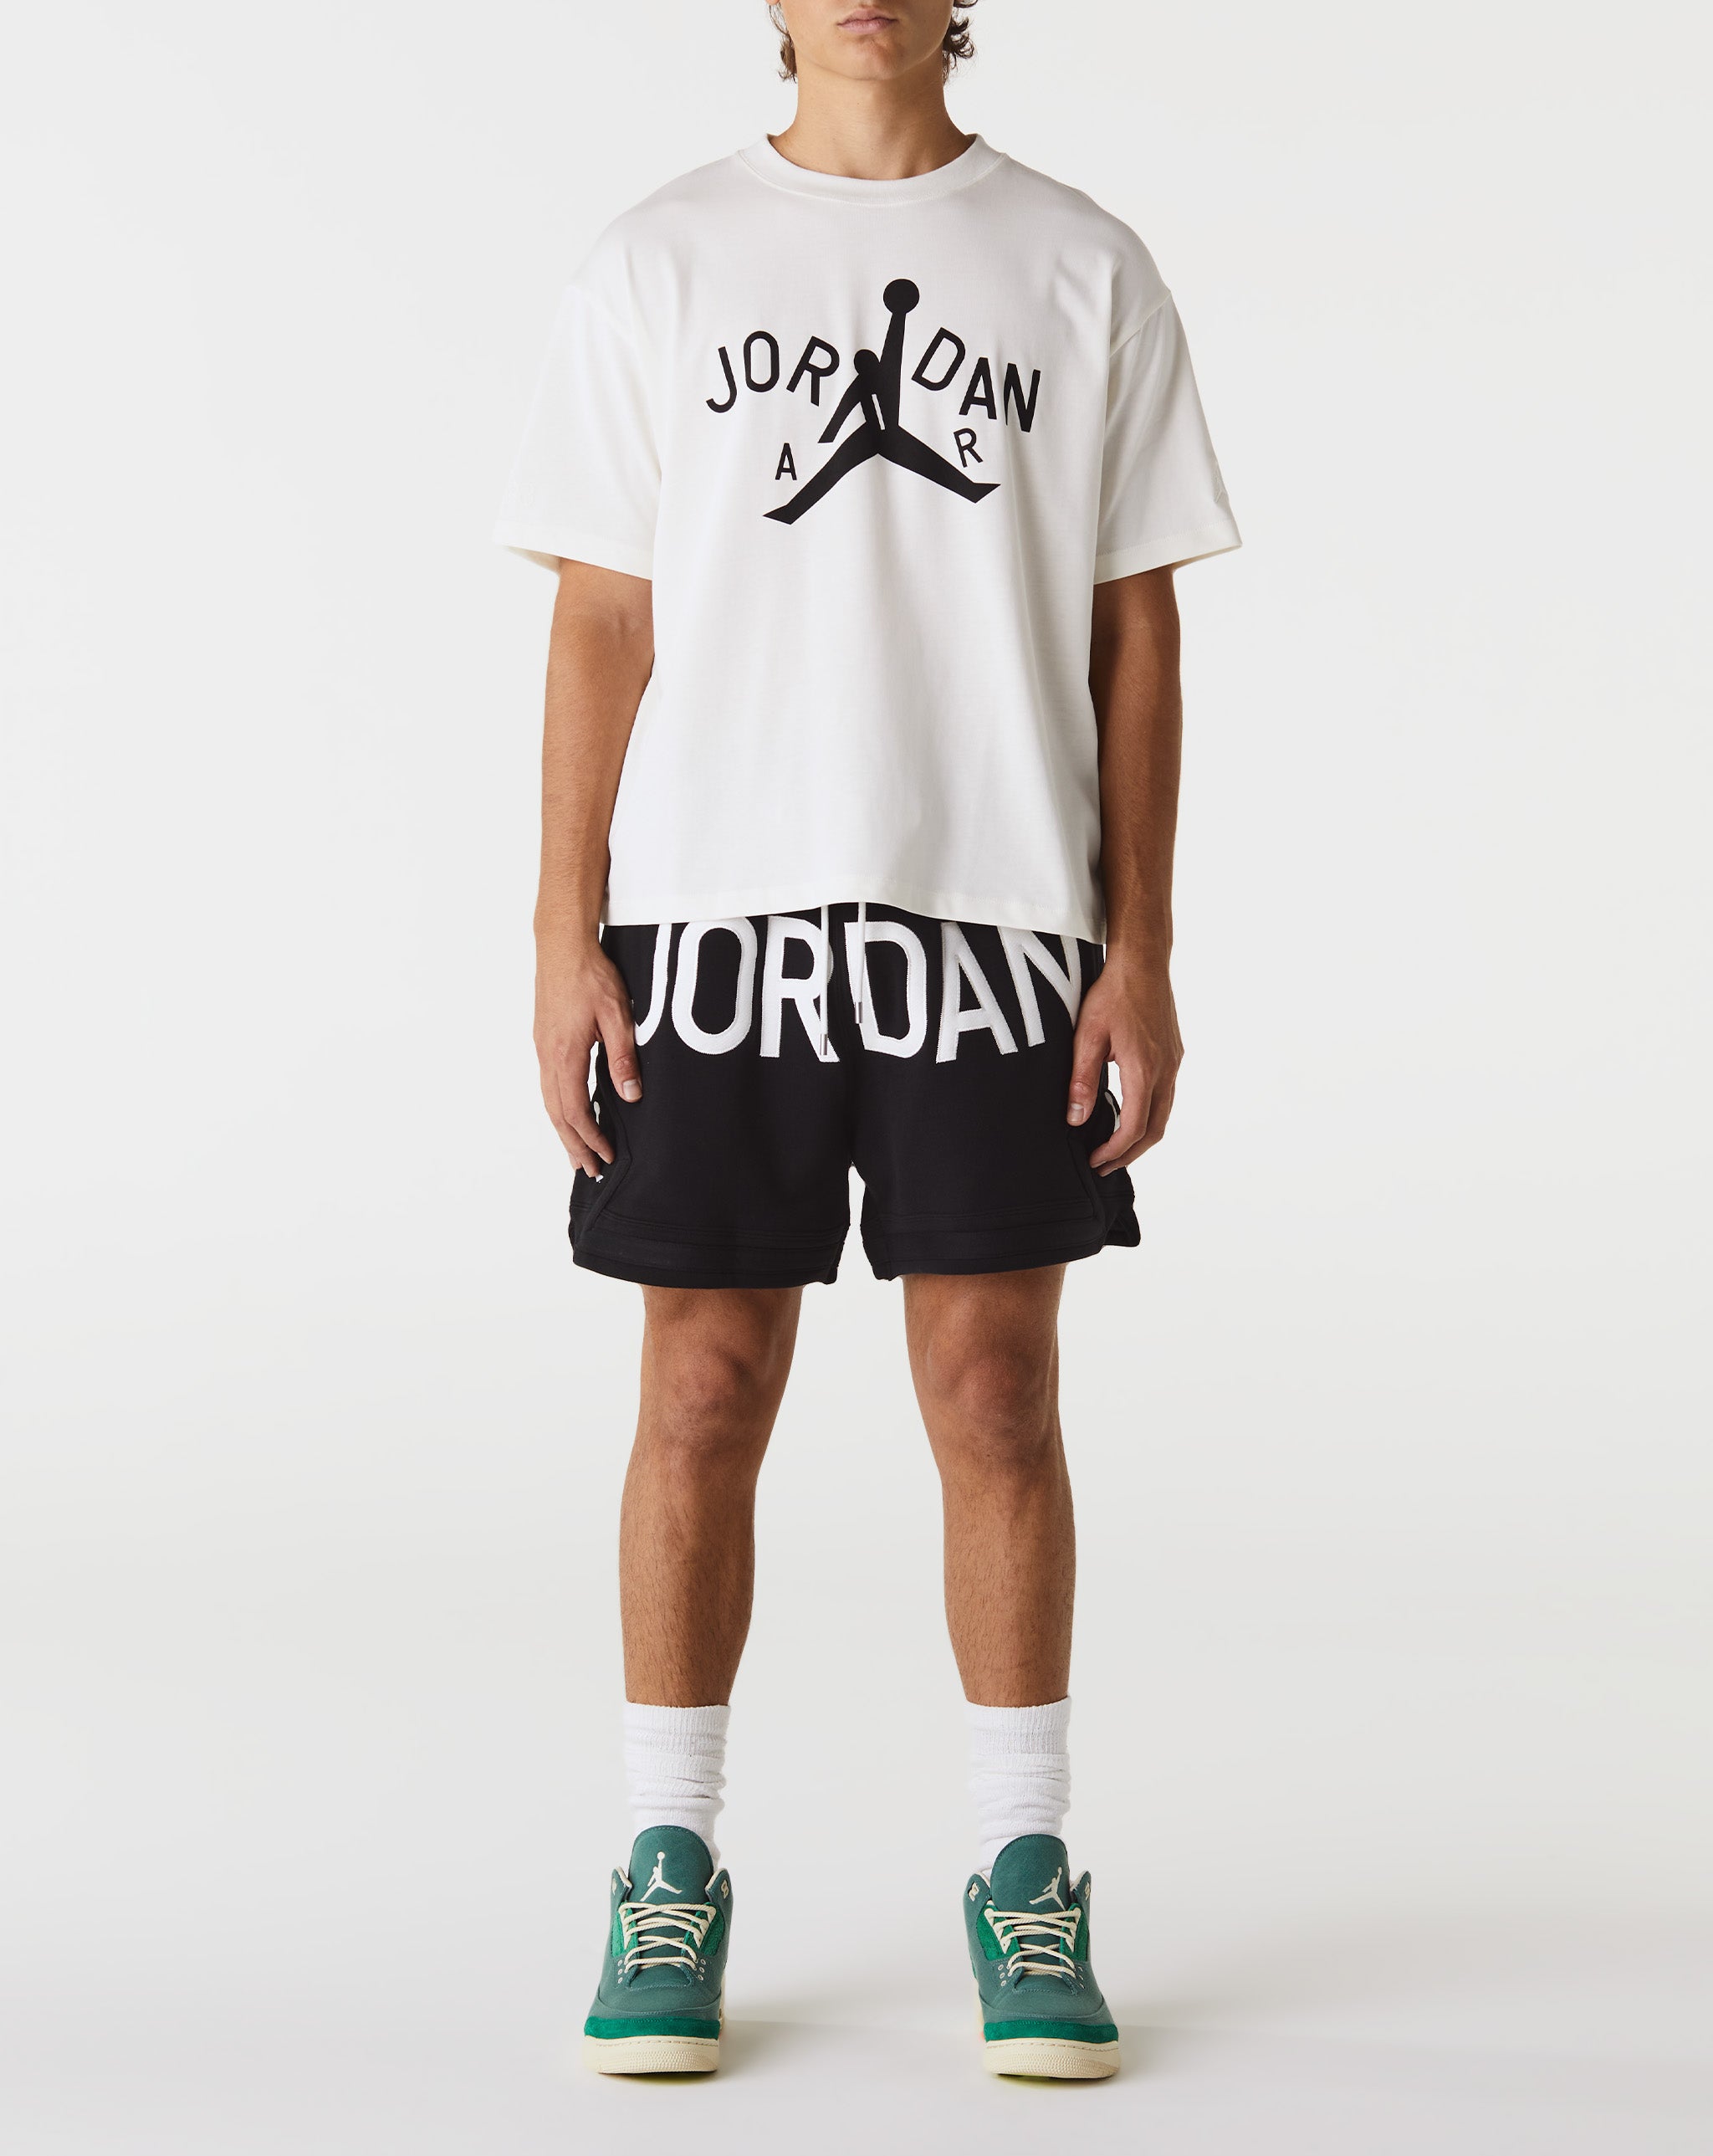 Air Jordan Nina Chanel Abney x T-Shirt  - Cheap Cerbe Jordan outlet